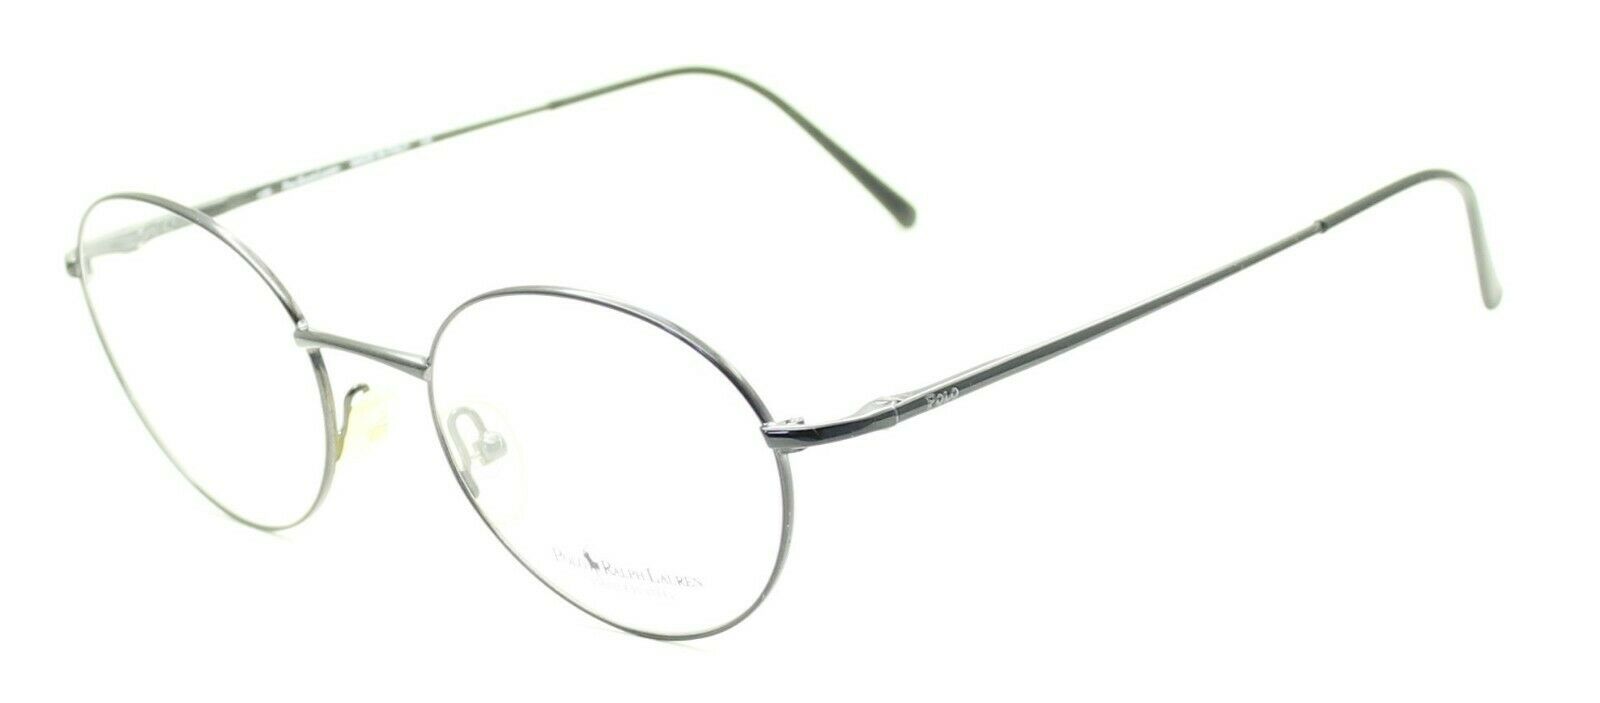 RALPH LAUREN POLO CLASSIC 428 TW3 50mm Eyewear FRAMES RX Optical Glasses -  New - GGV Eyewear